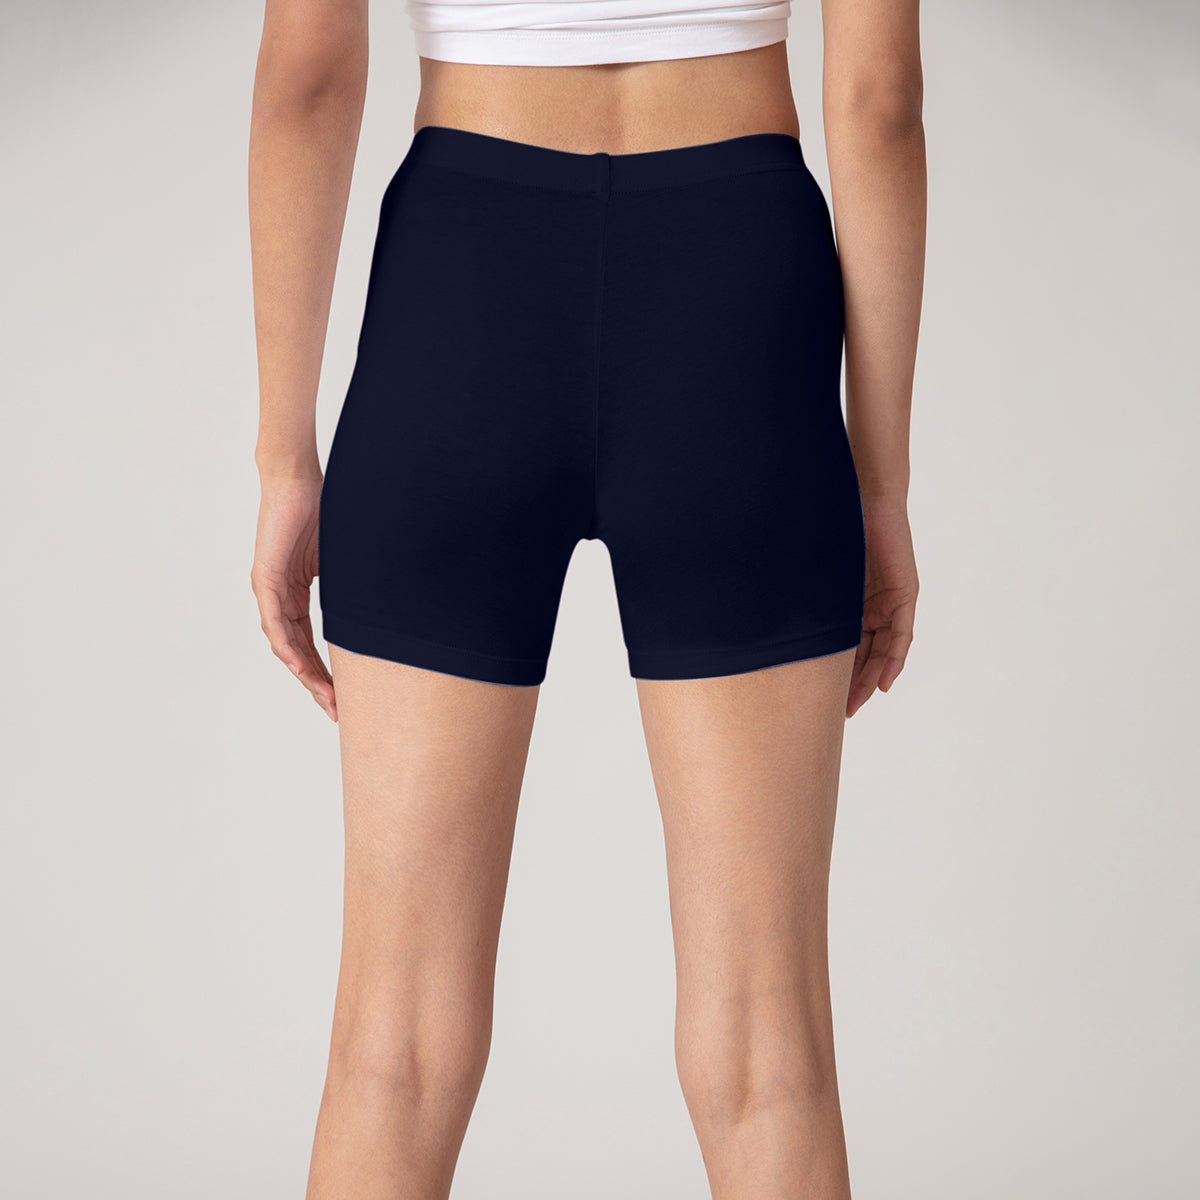 Nykd by Nykaa Stretch cotton cycling shorts - Navy NYP083